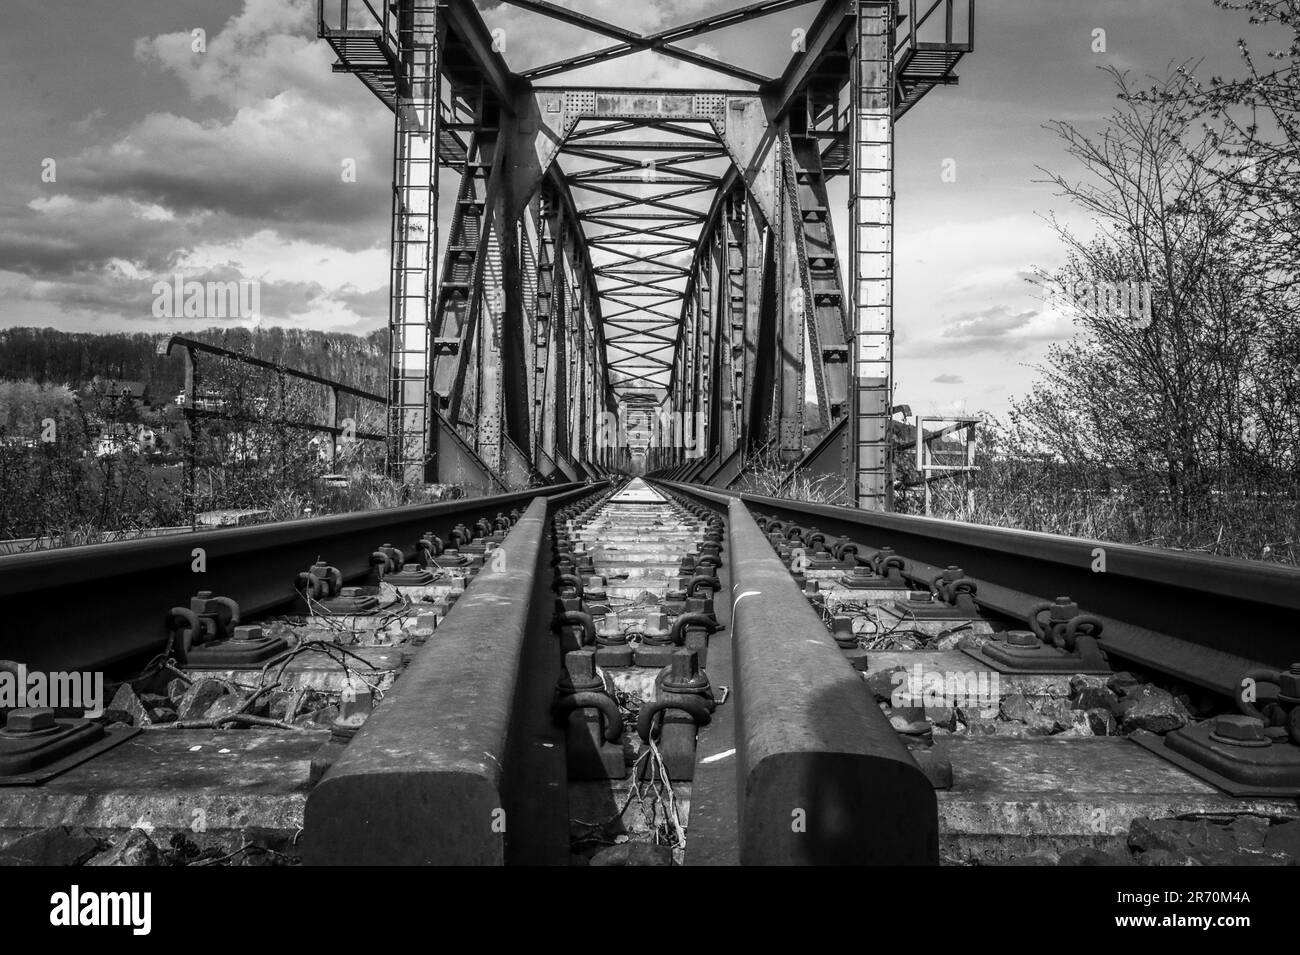 railway tracks with a iron bridge Stock Photo